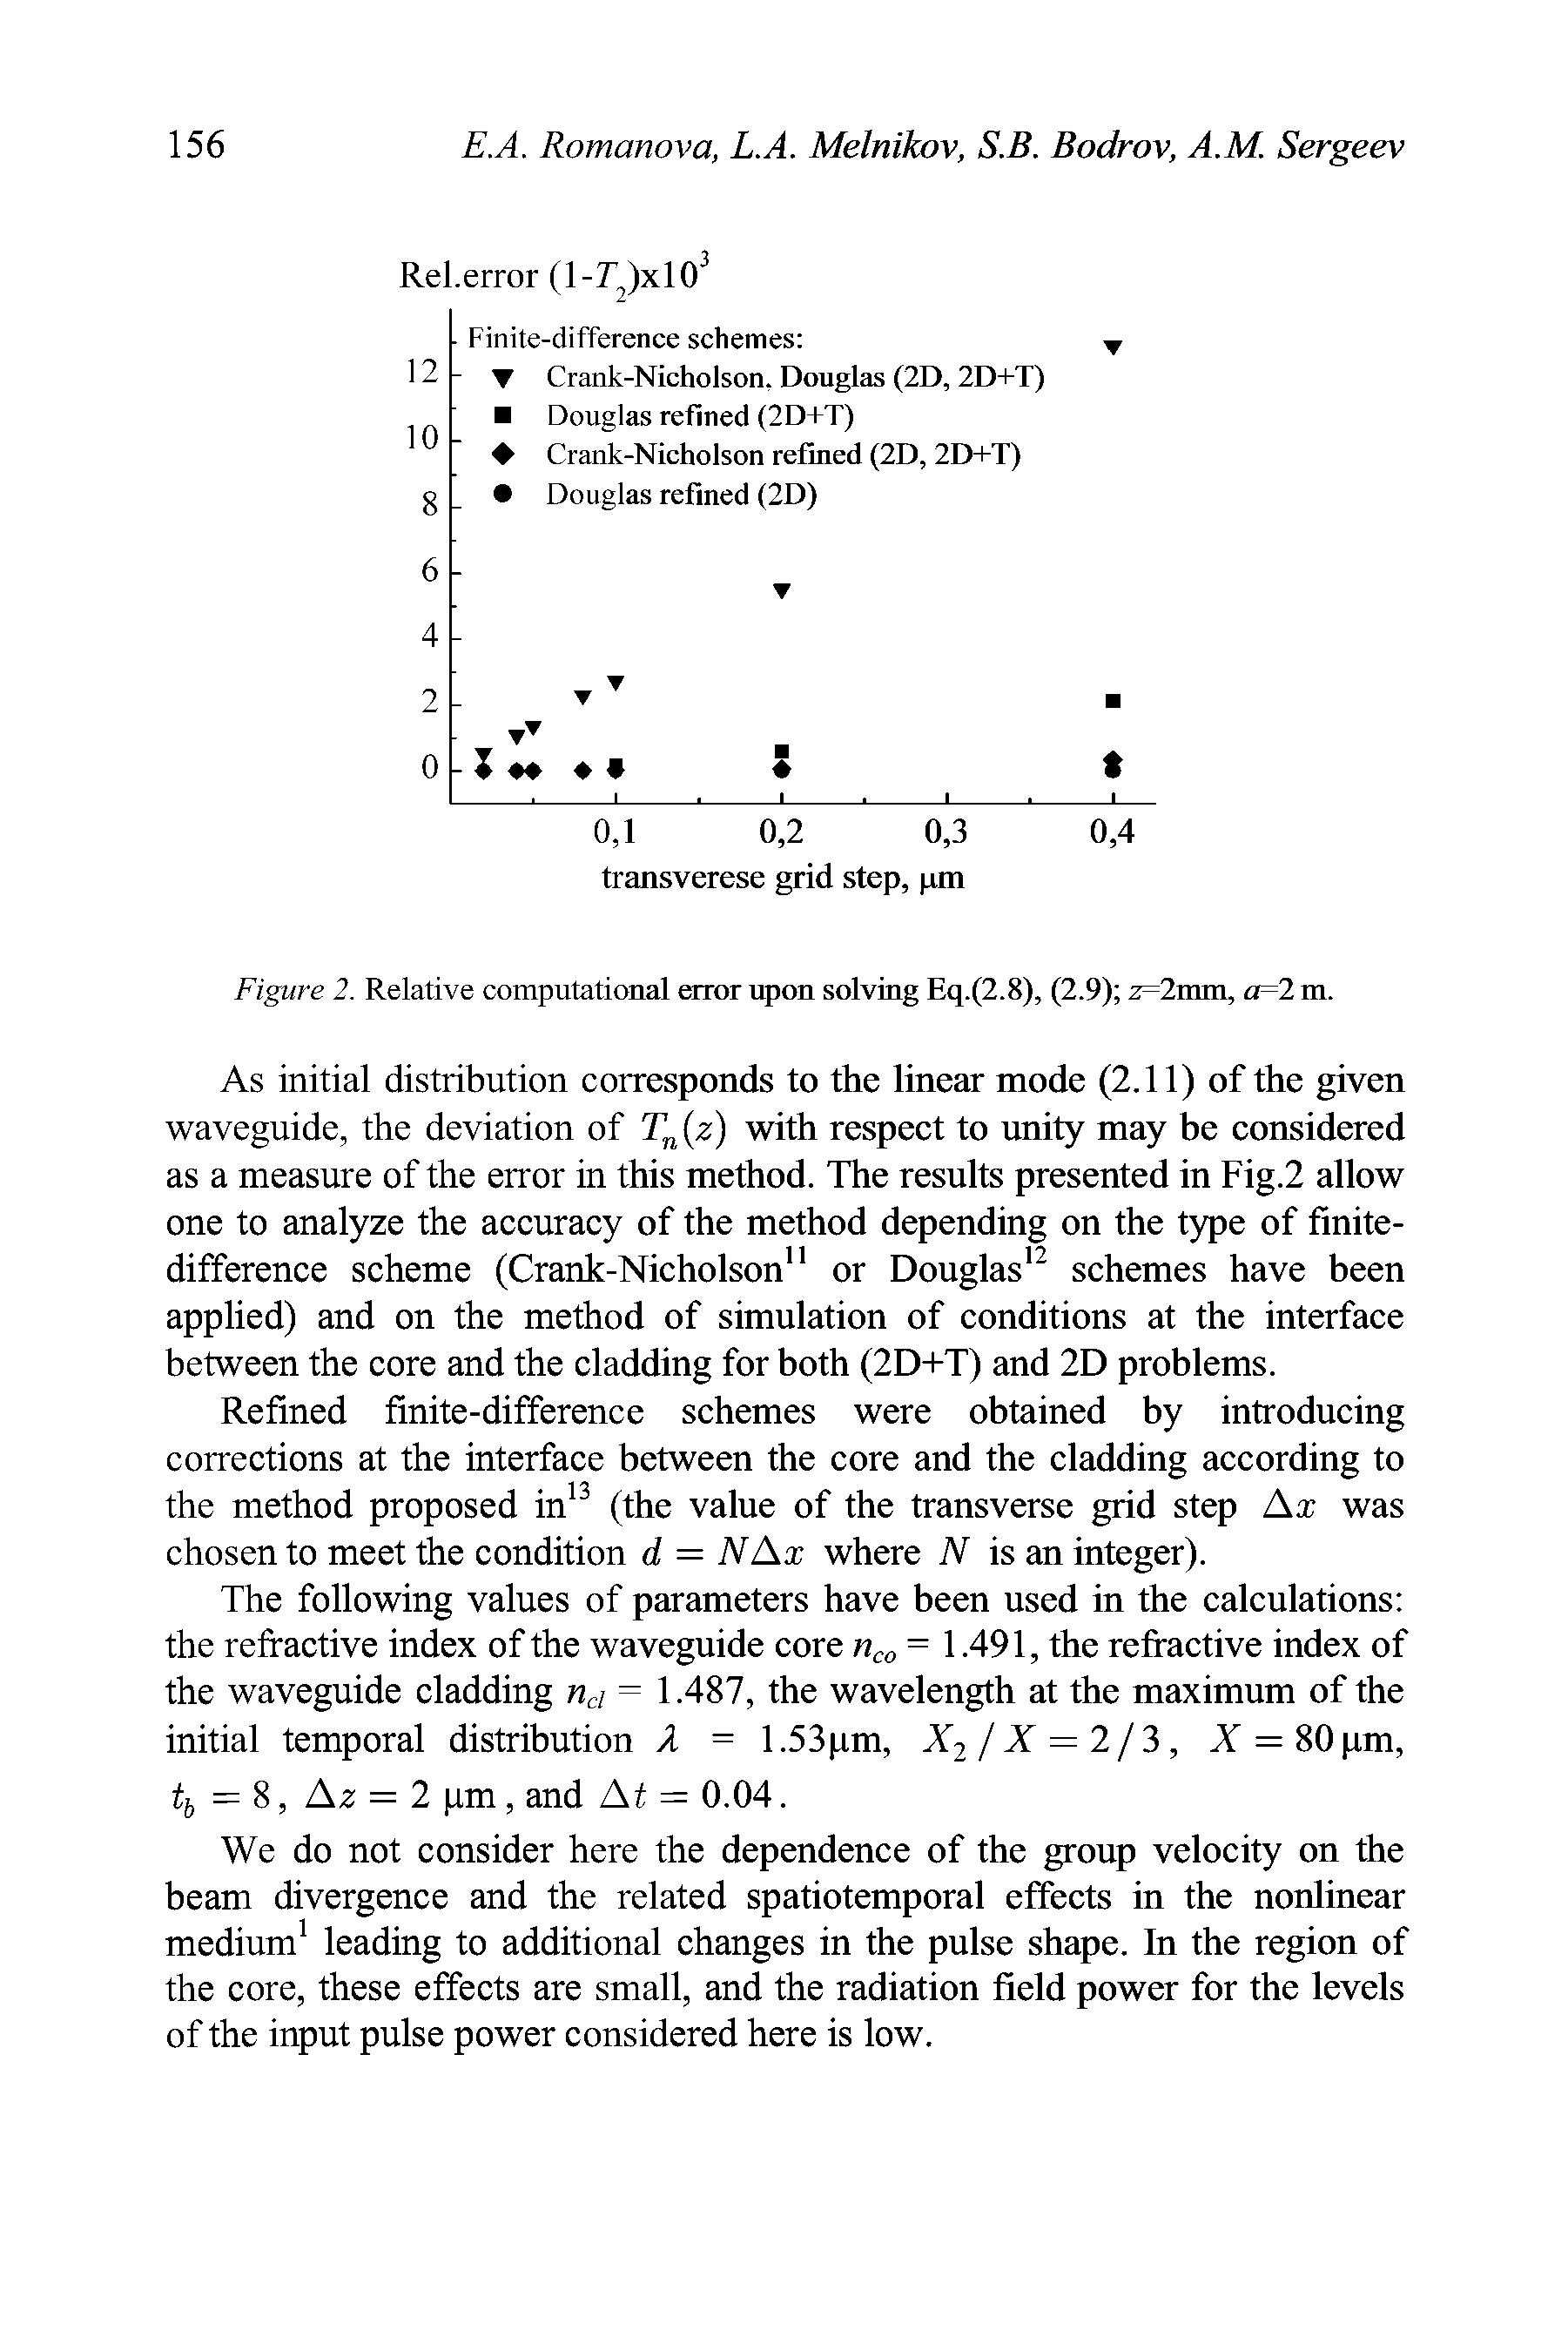 Figure 2. Relative computational error upon solving Eq.(2.8), (2.9) z=2imn, a=2 m.